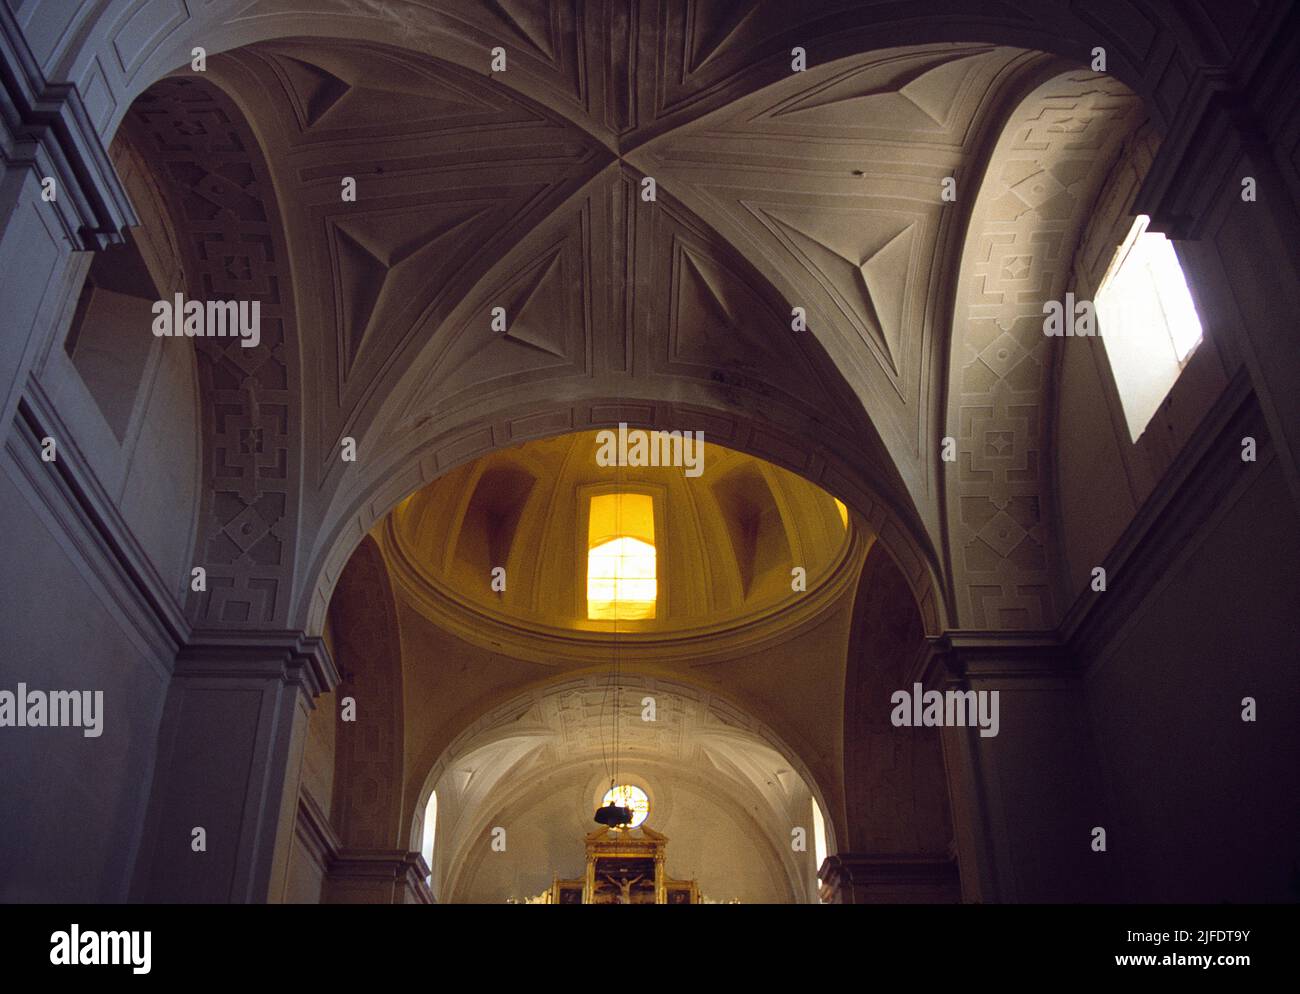 Vault of the church. San Zoilo Monastery, Carrion de los Condes, palencia province, Castilla Leon, Spain. Stock Photo